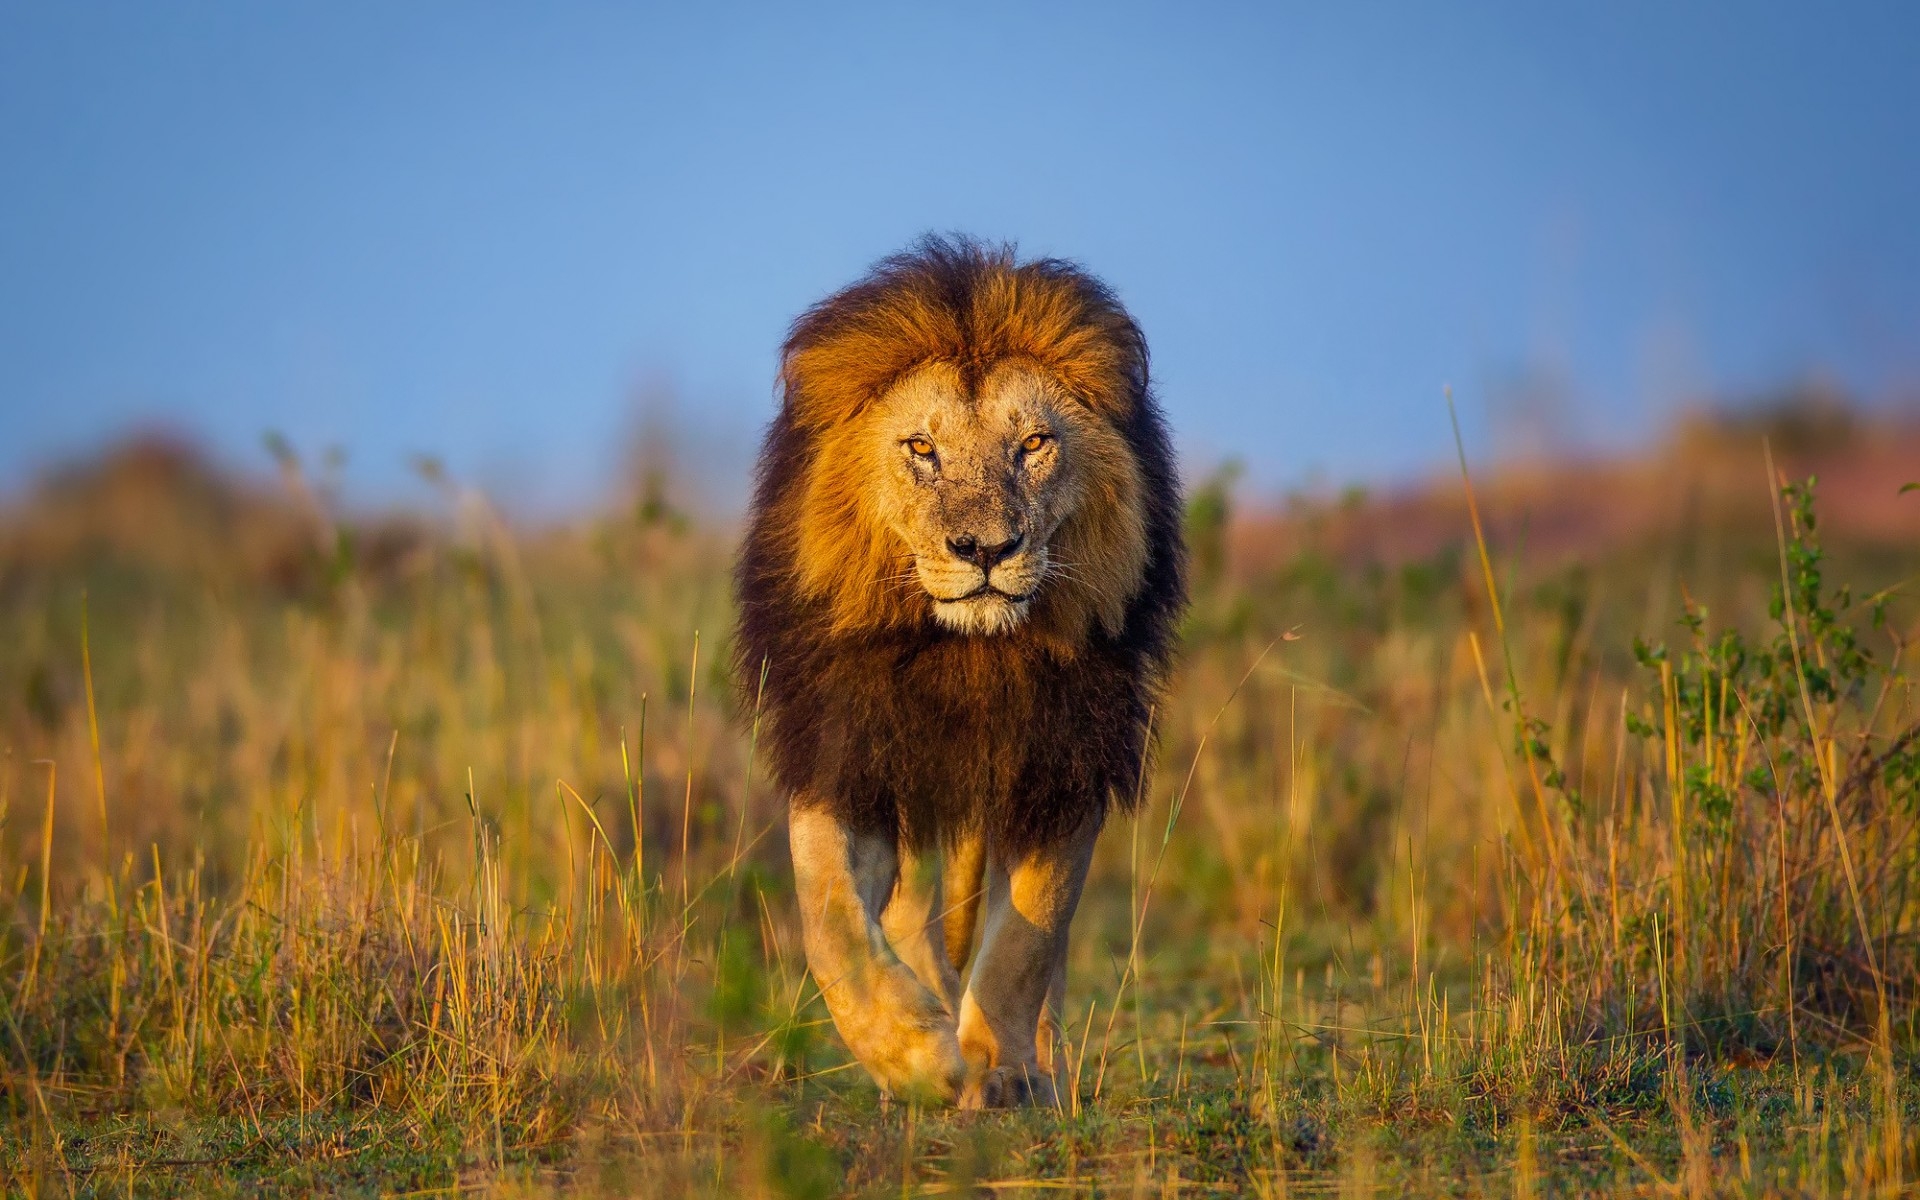 378257 descargar imagen animales, león, áfrica, bokeh, gatos: fondos de pantalla y protectores de pantalla gratis